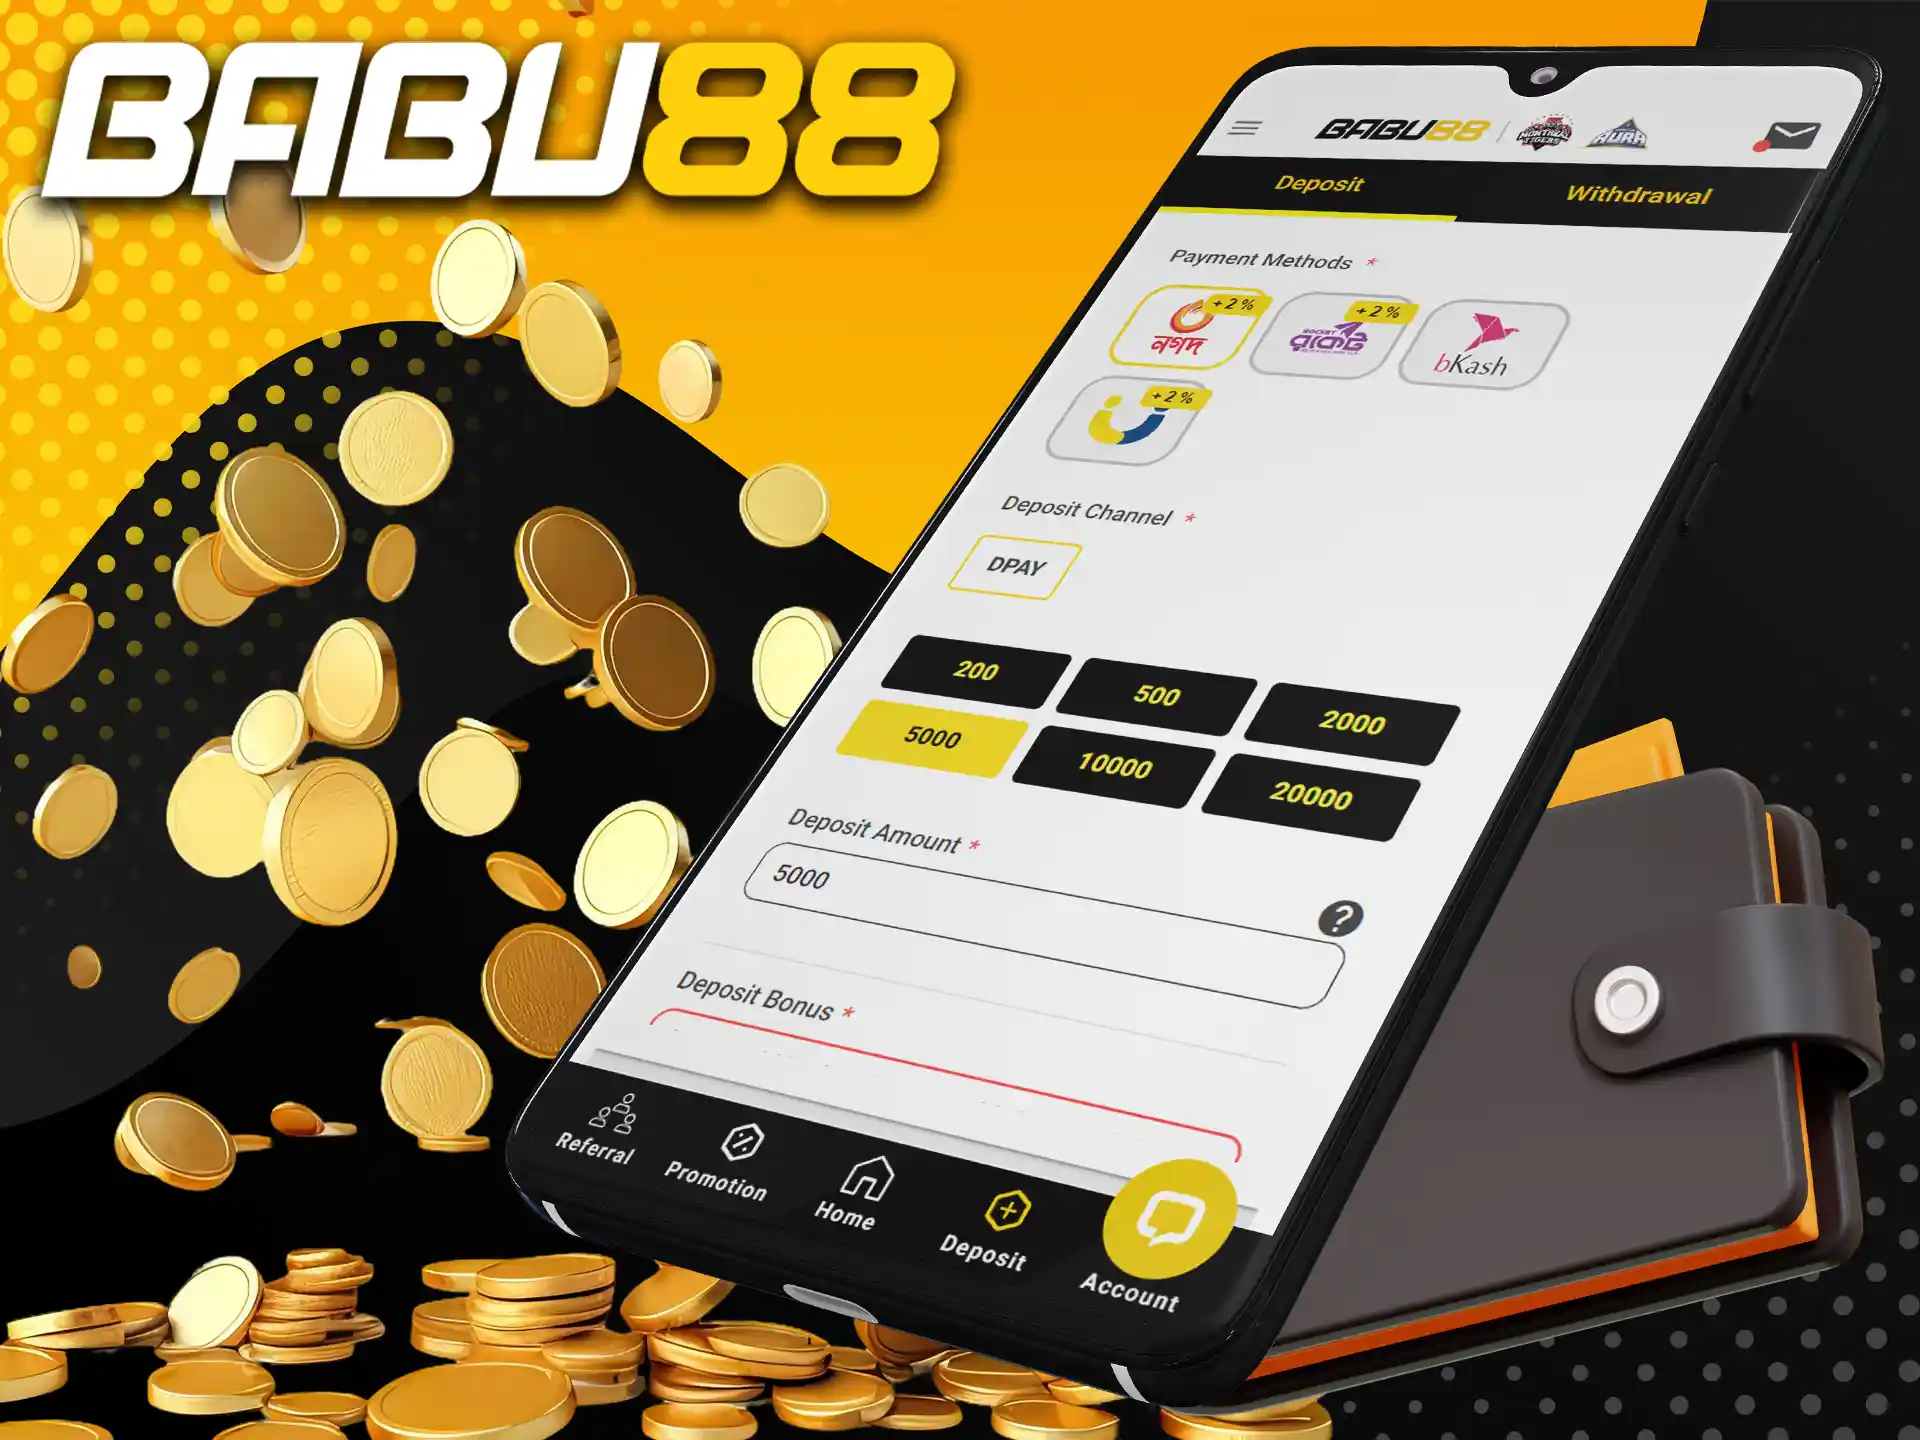 You can make a deposit through the Babu88 Bangladesh mobile app.